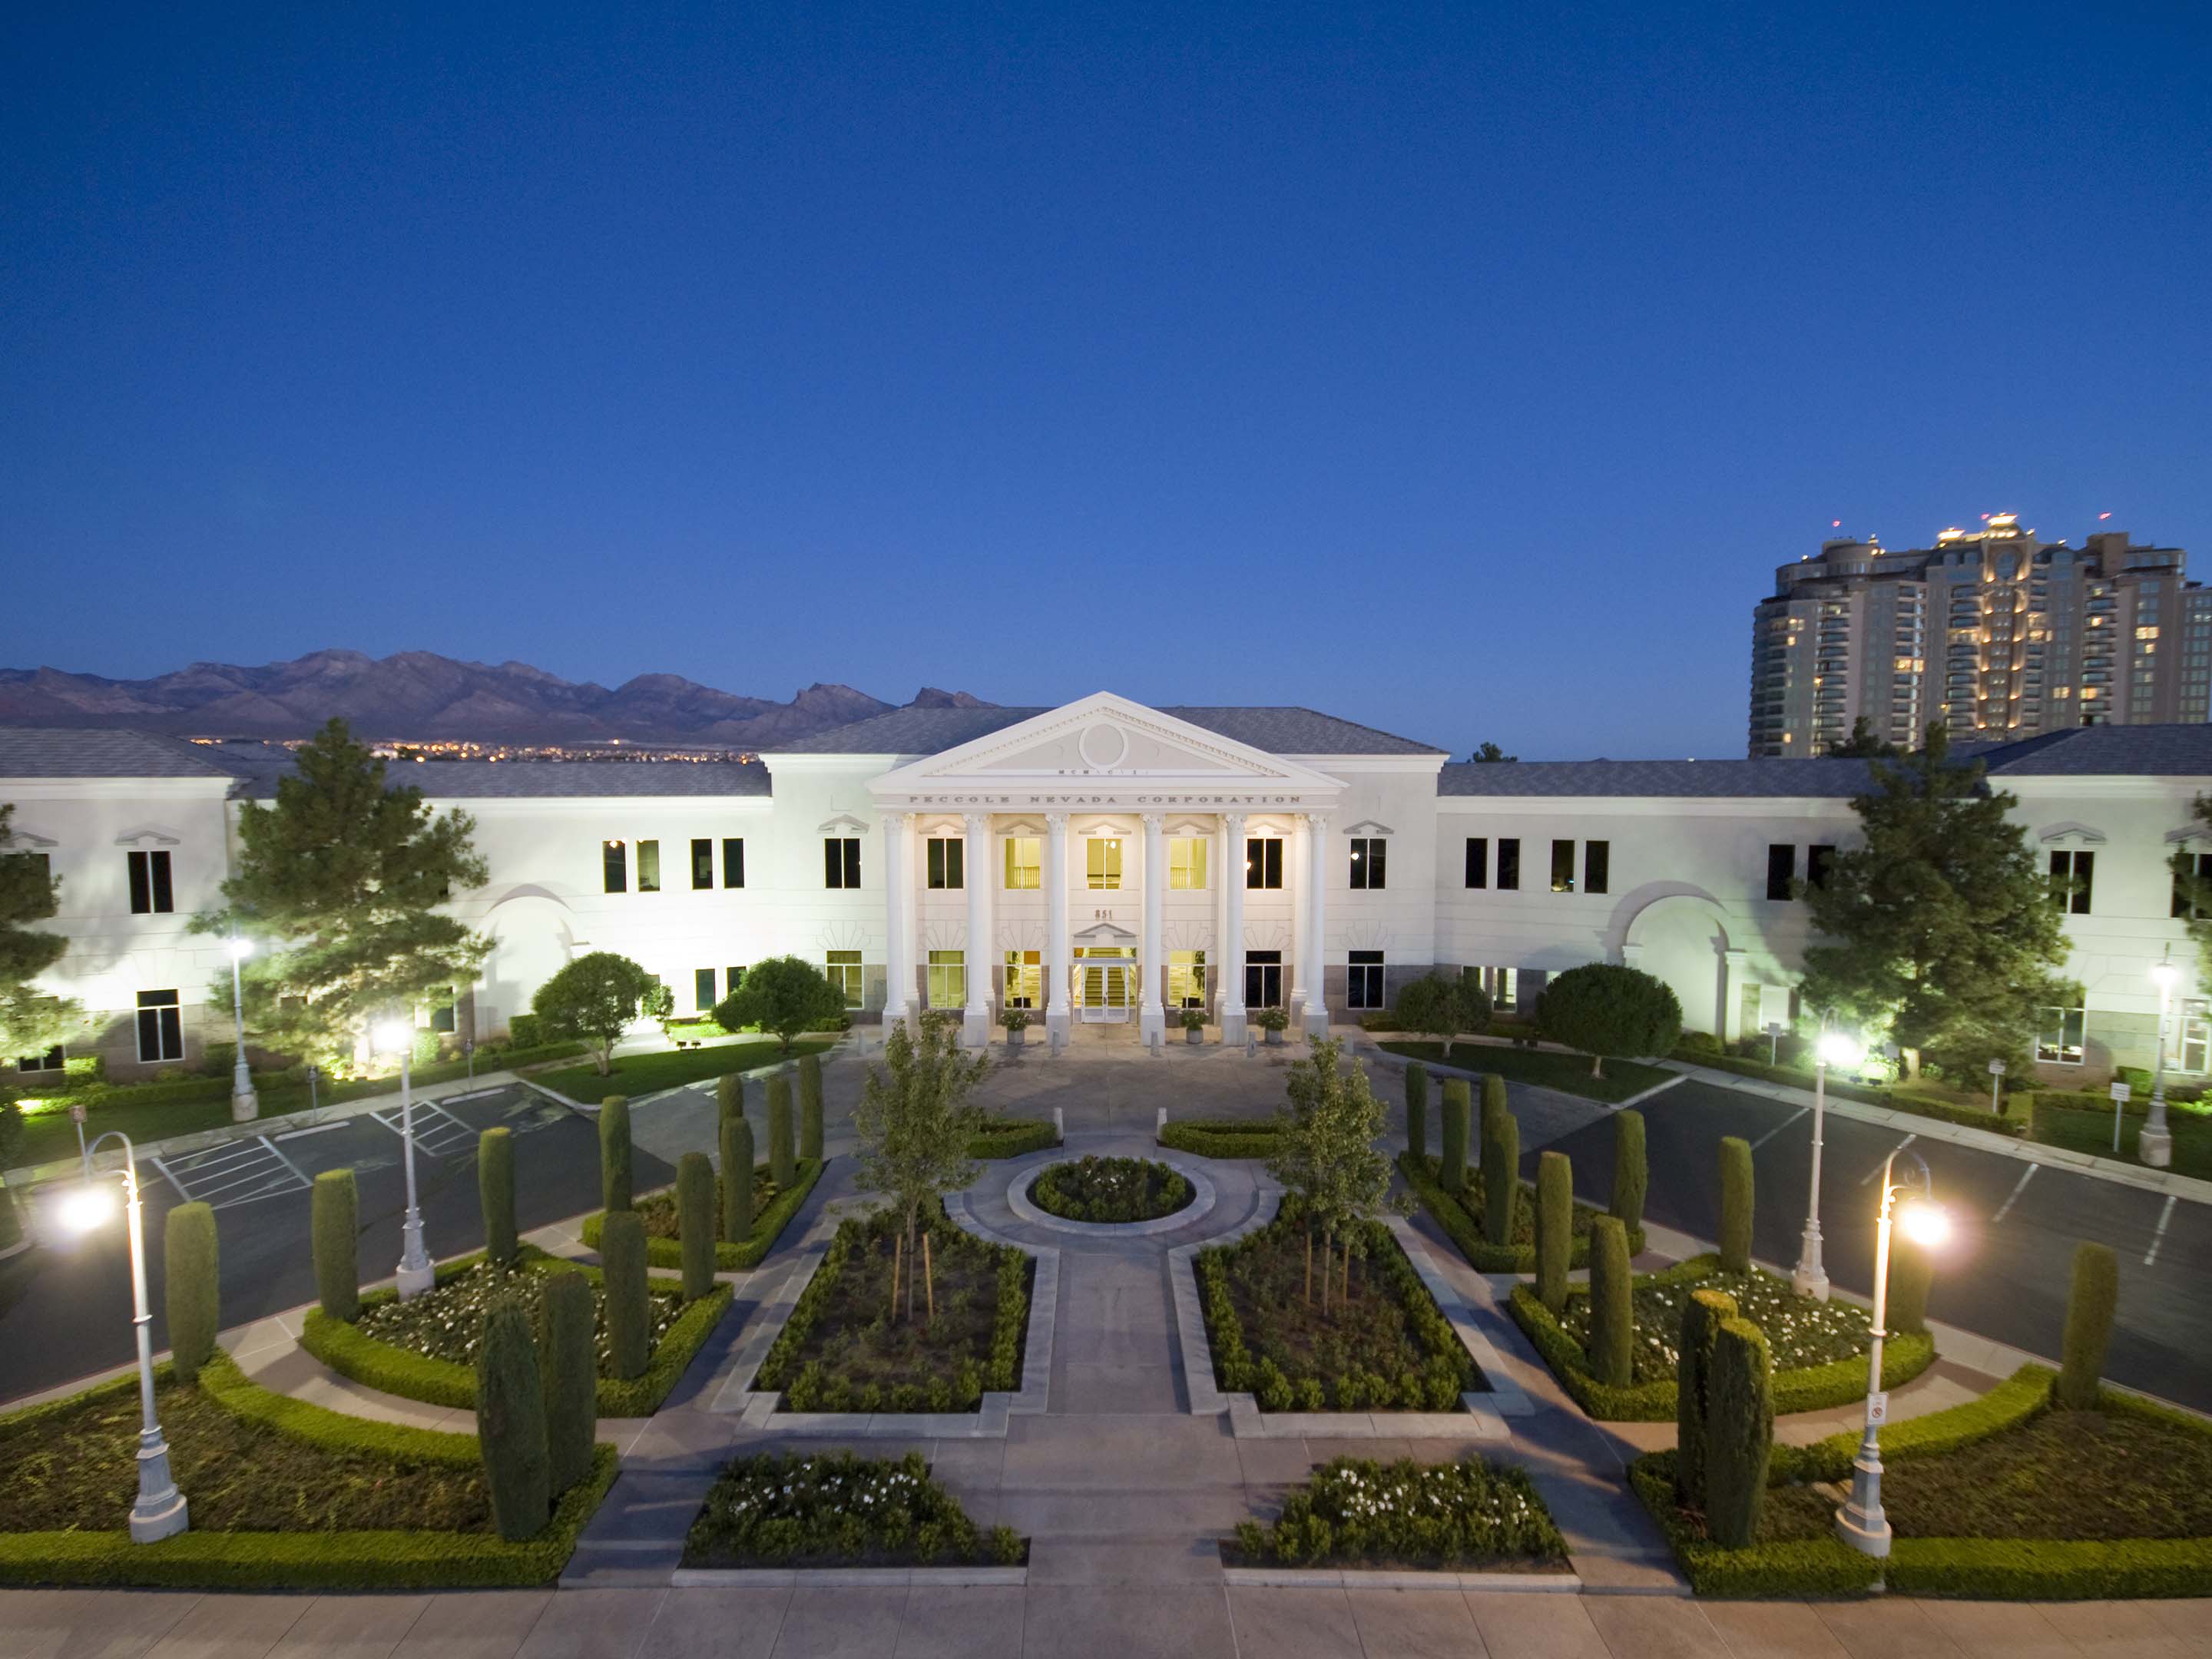 Cenegenics Headquarters in Las Vegas: Global Leader in Age Management Medicine